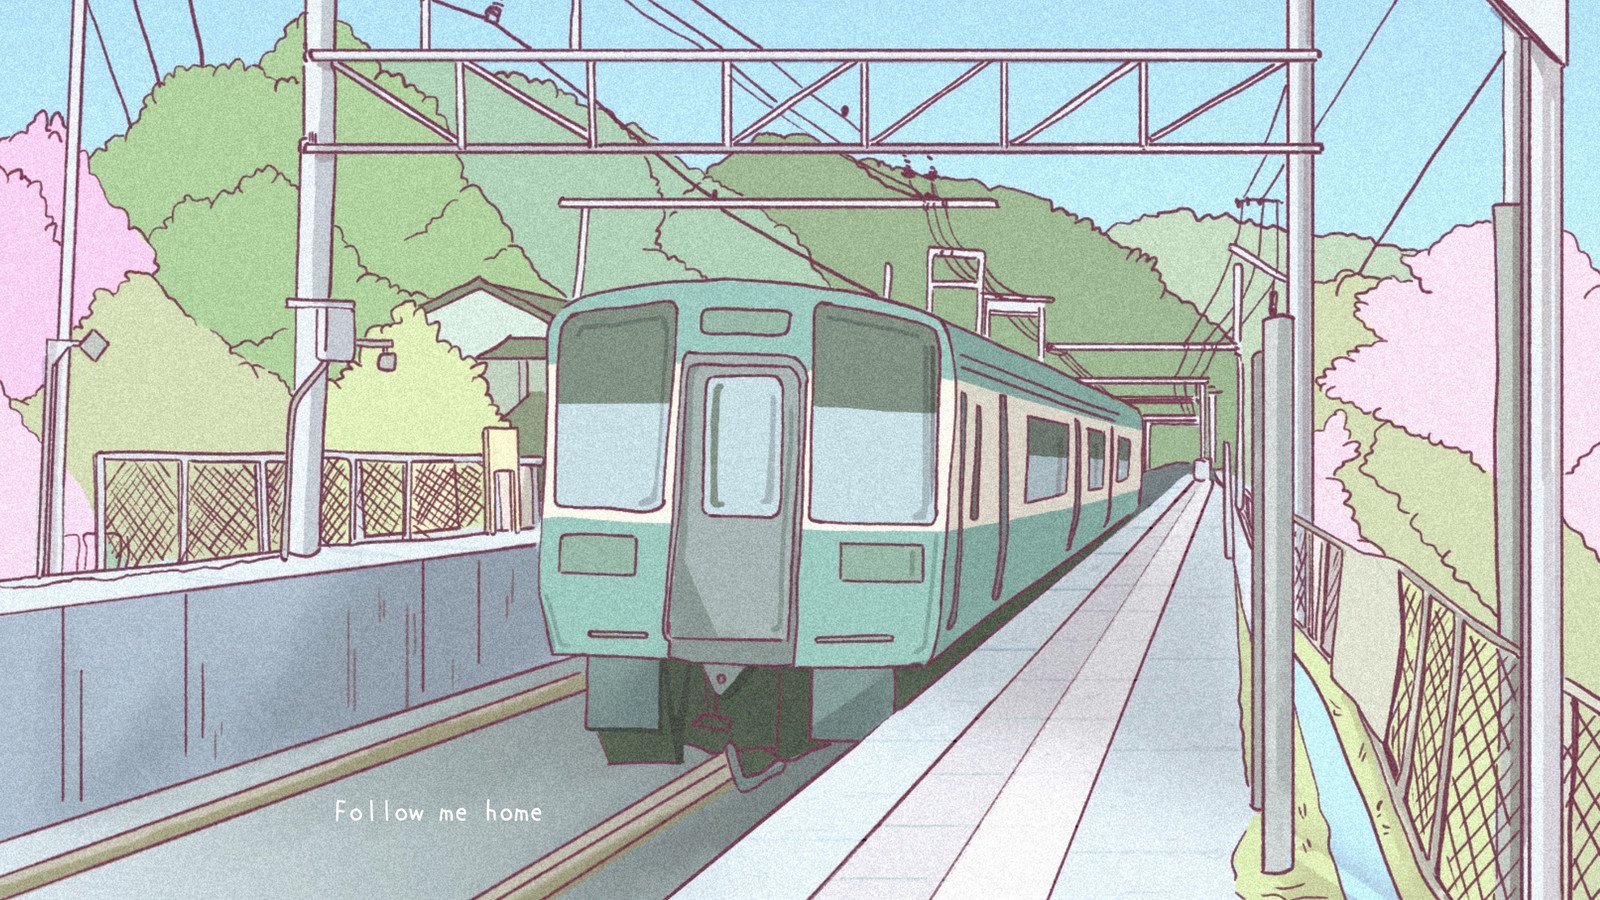  𝚜𝚘𝚙𝚑𝚒𝚊  Green aesthetic Ghibli artwork Studio ghibli art